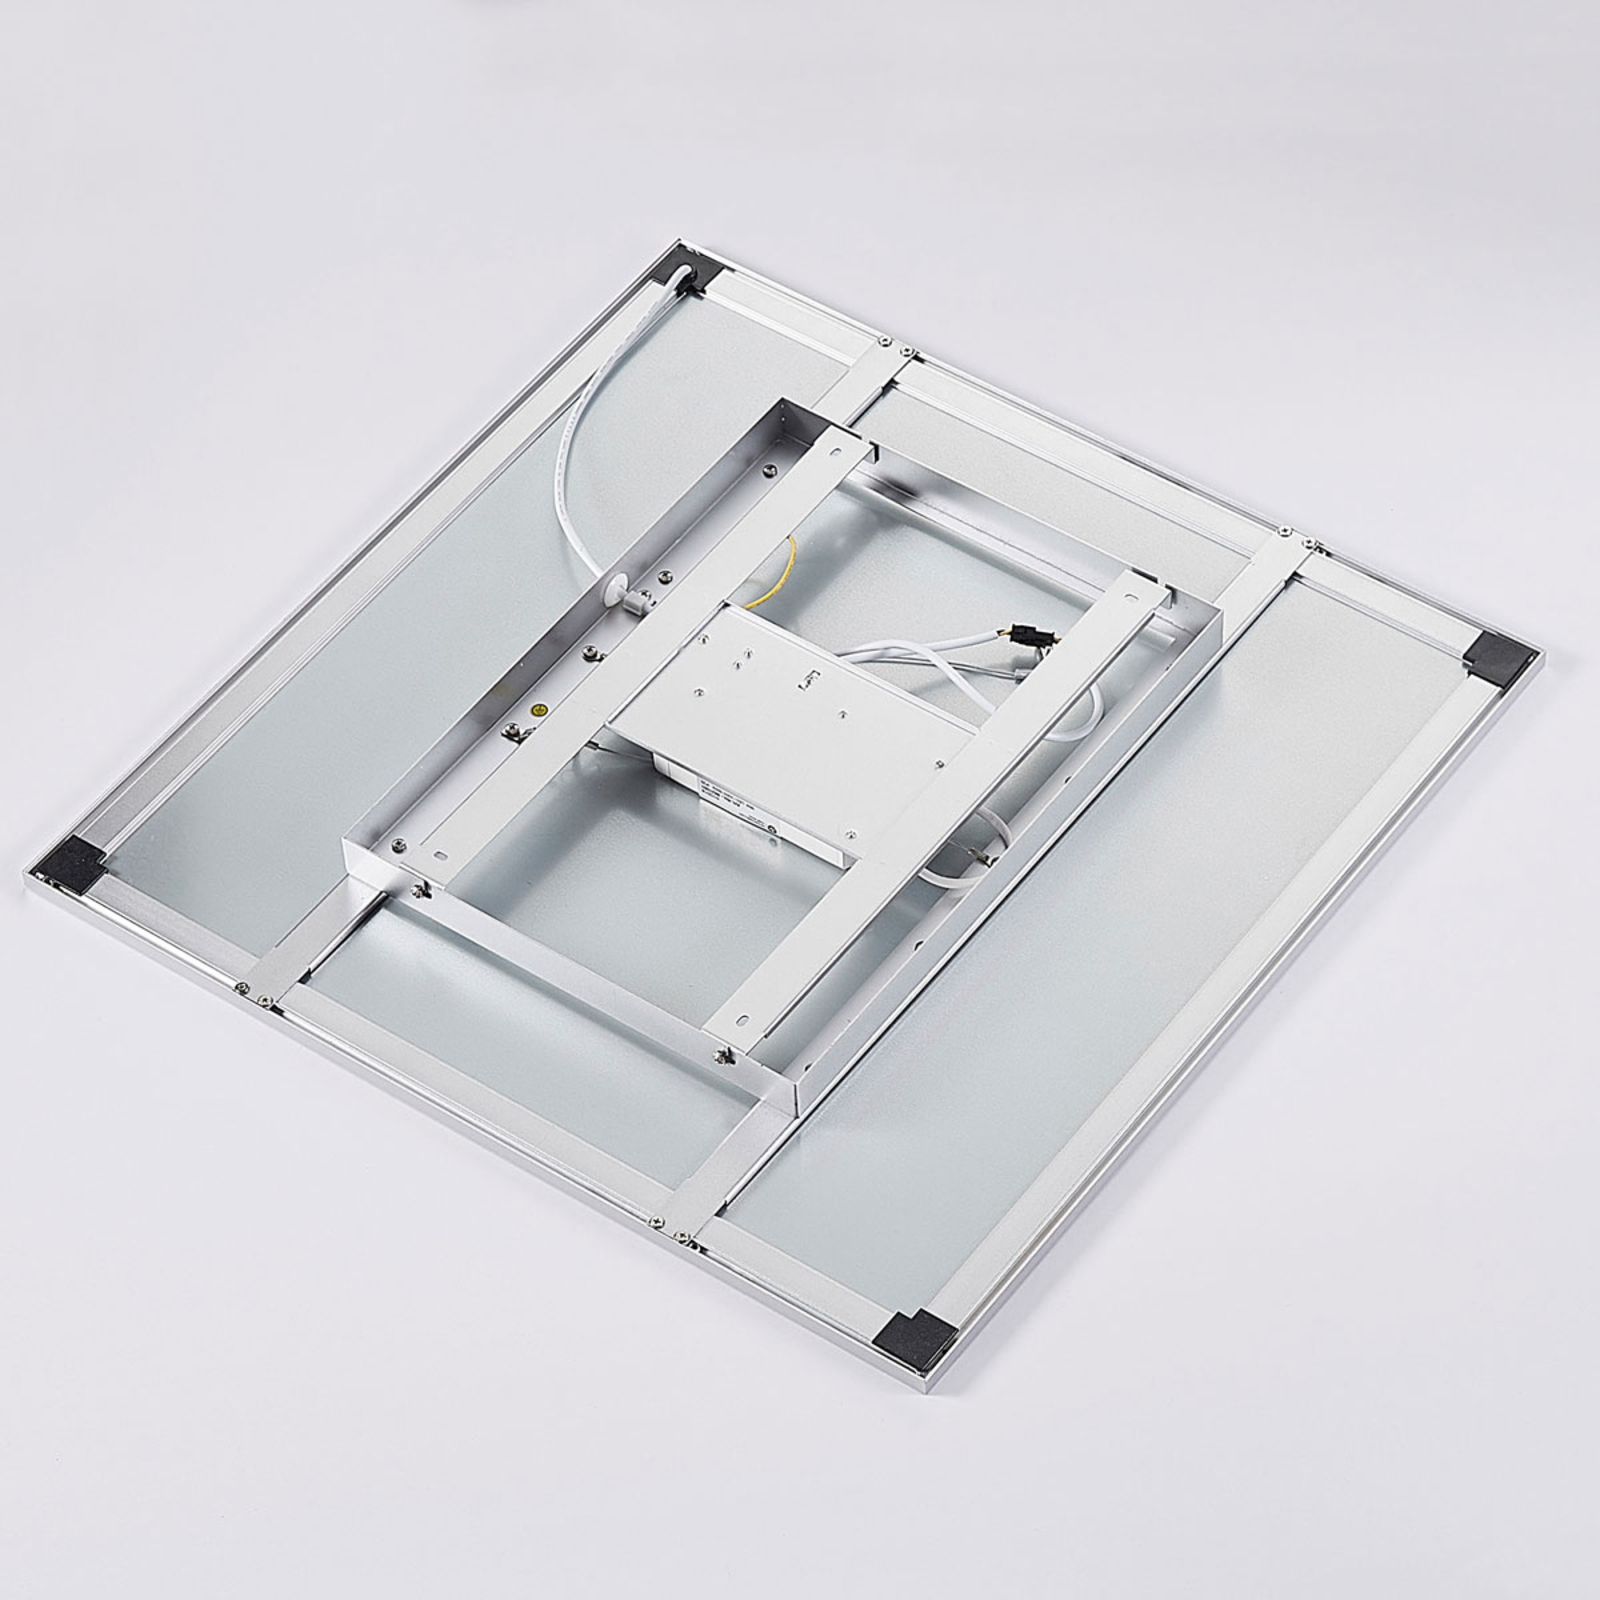 Arcchio Lysander LED-panel, CCT, 62 cm, hvit